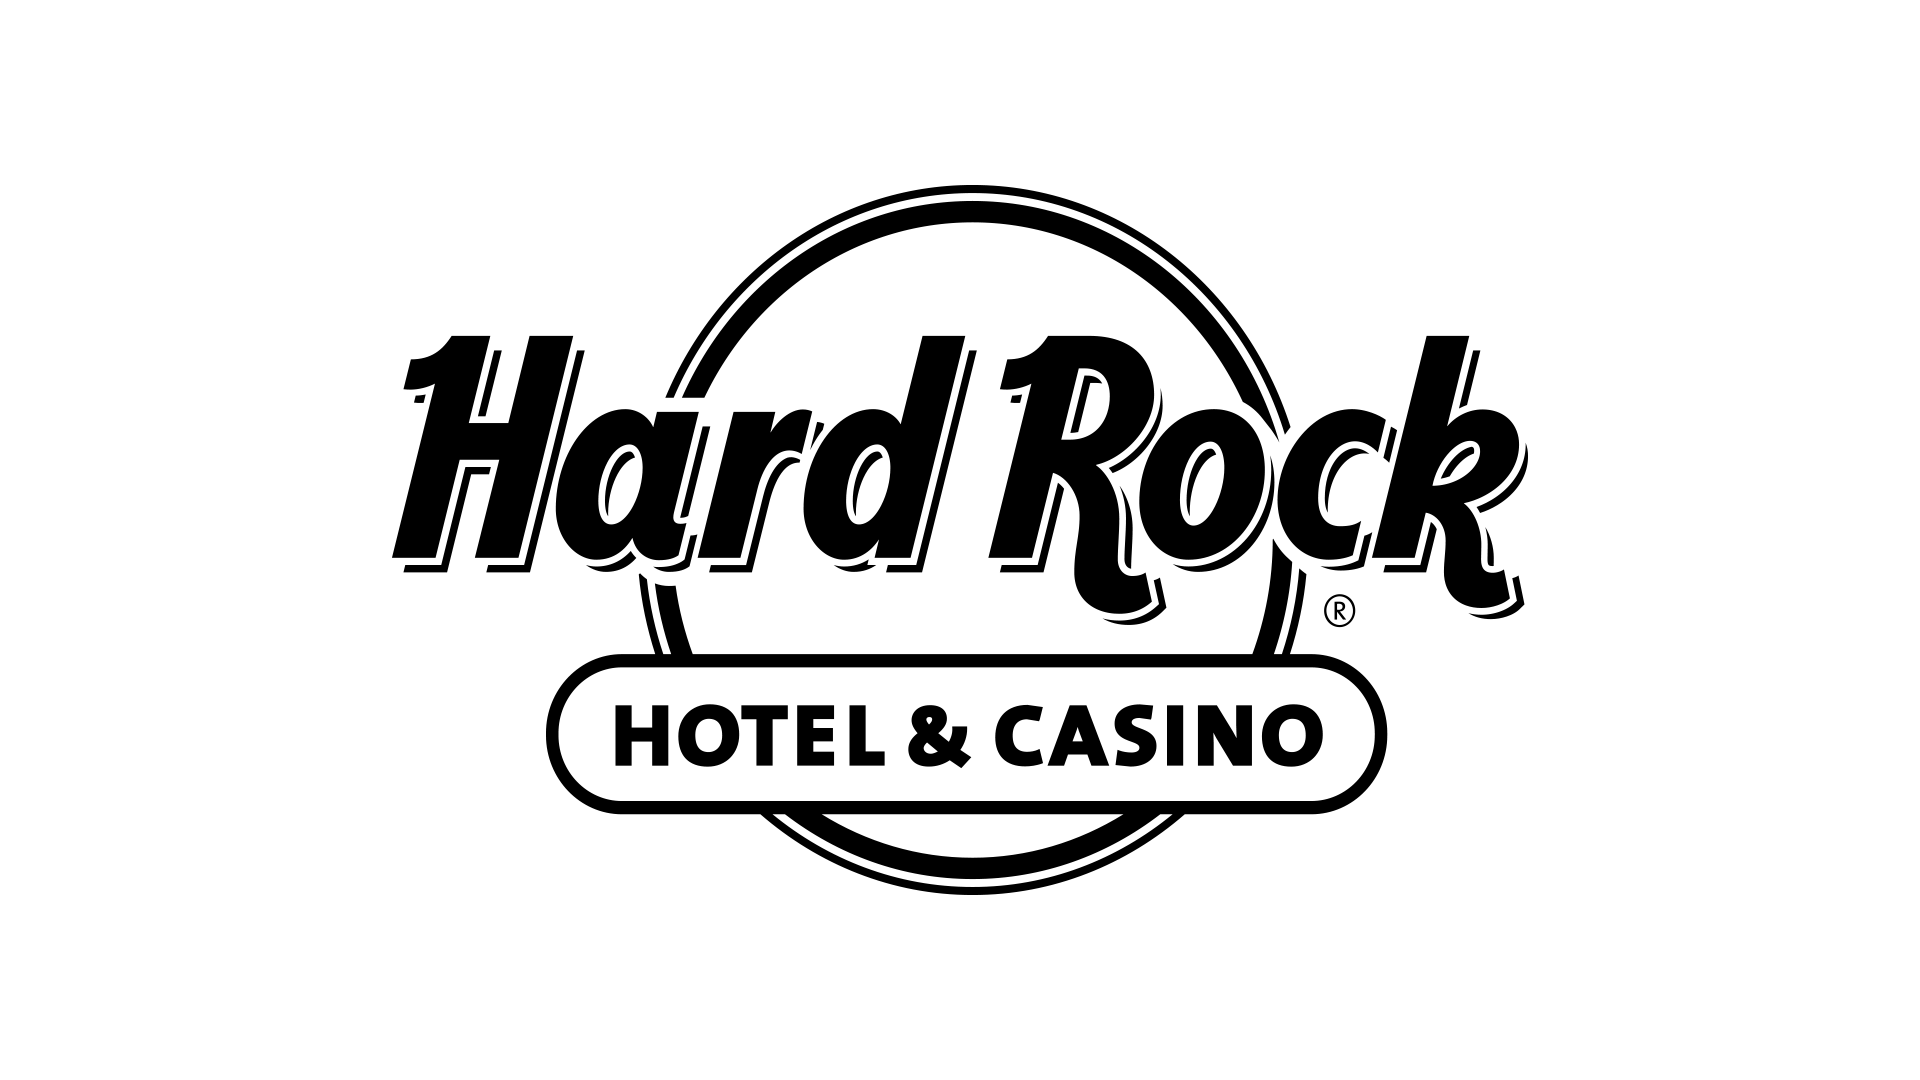 hard rock casino sacramento events